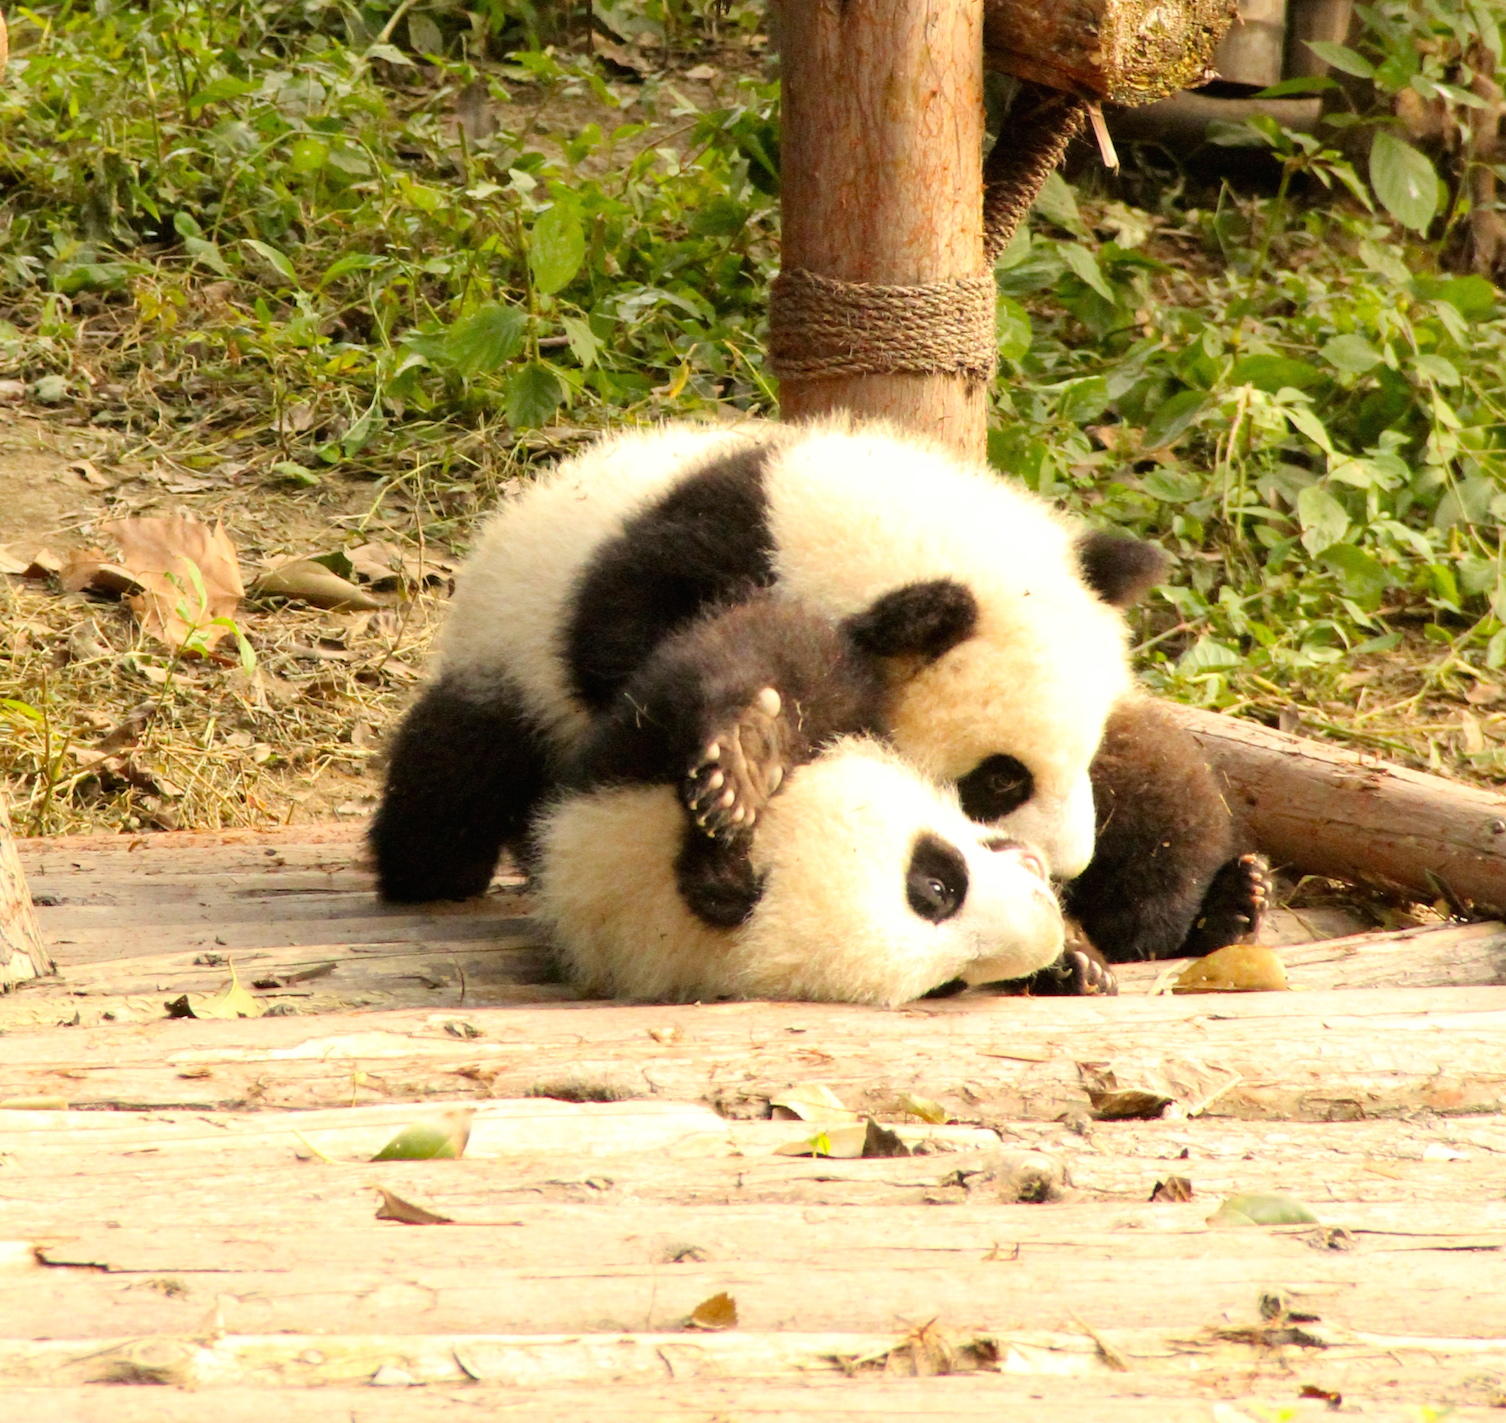 Giant Panda Research facility in Chengdu China explored | KCBX